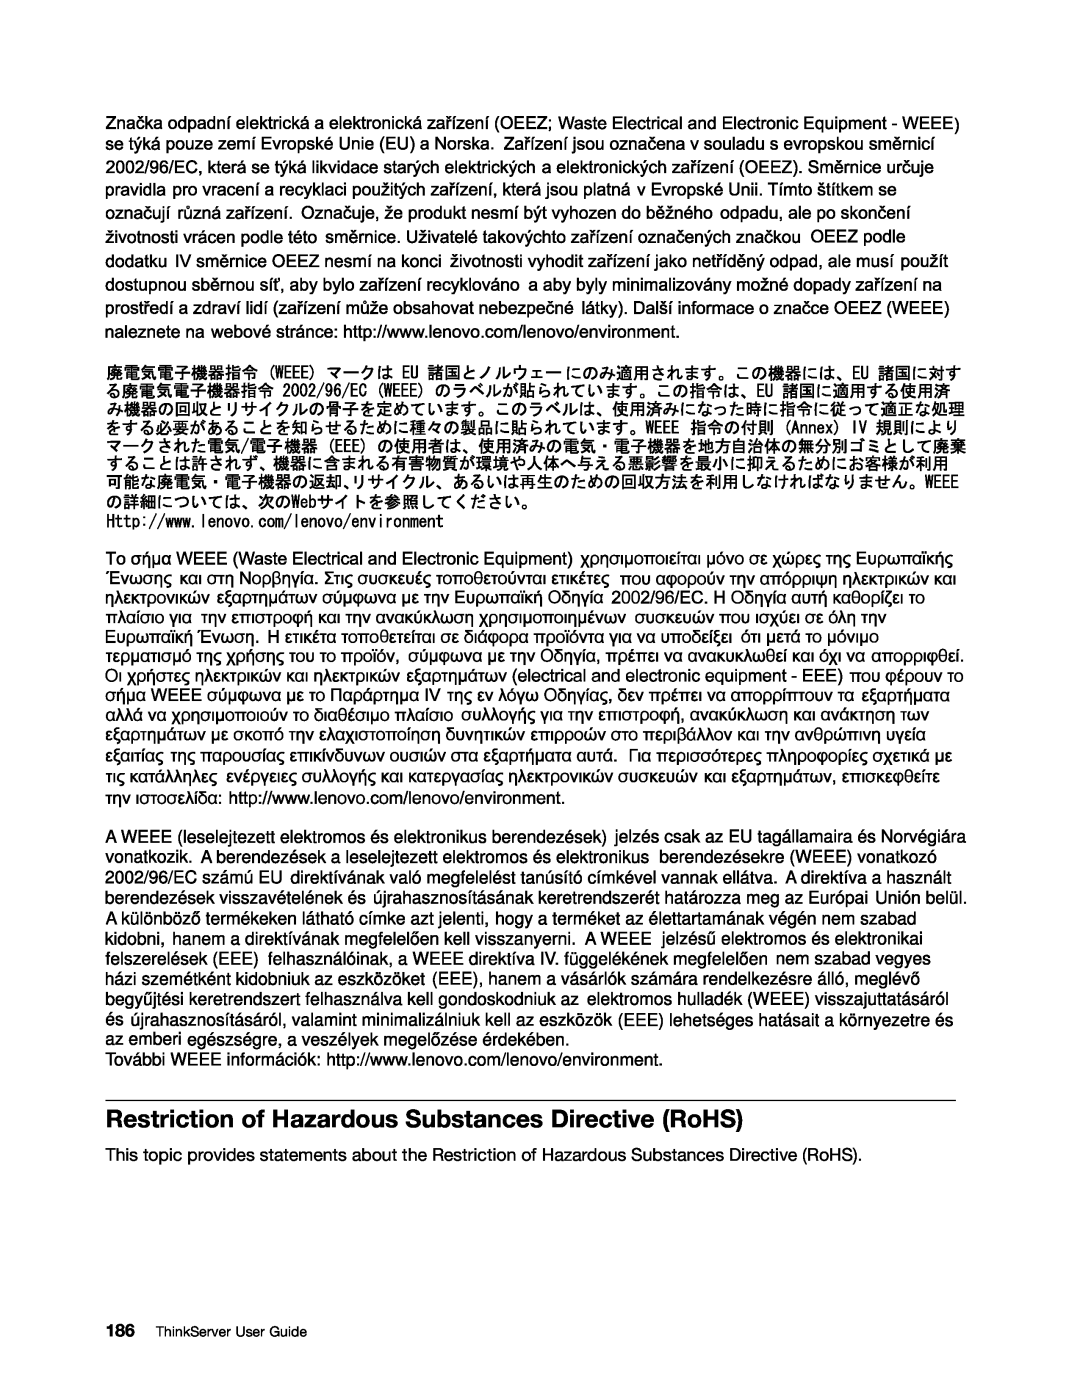 Lenovo 390, 387, 393, 391, 389, 388, 441, 392 manual Restriction of Hazardous Substances Directive RoHS, ThinkServer User Guide 